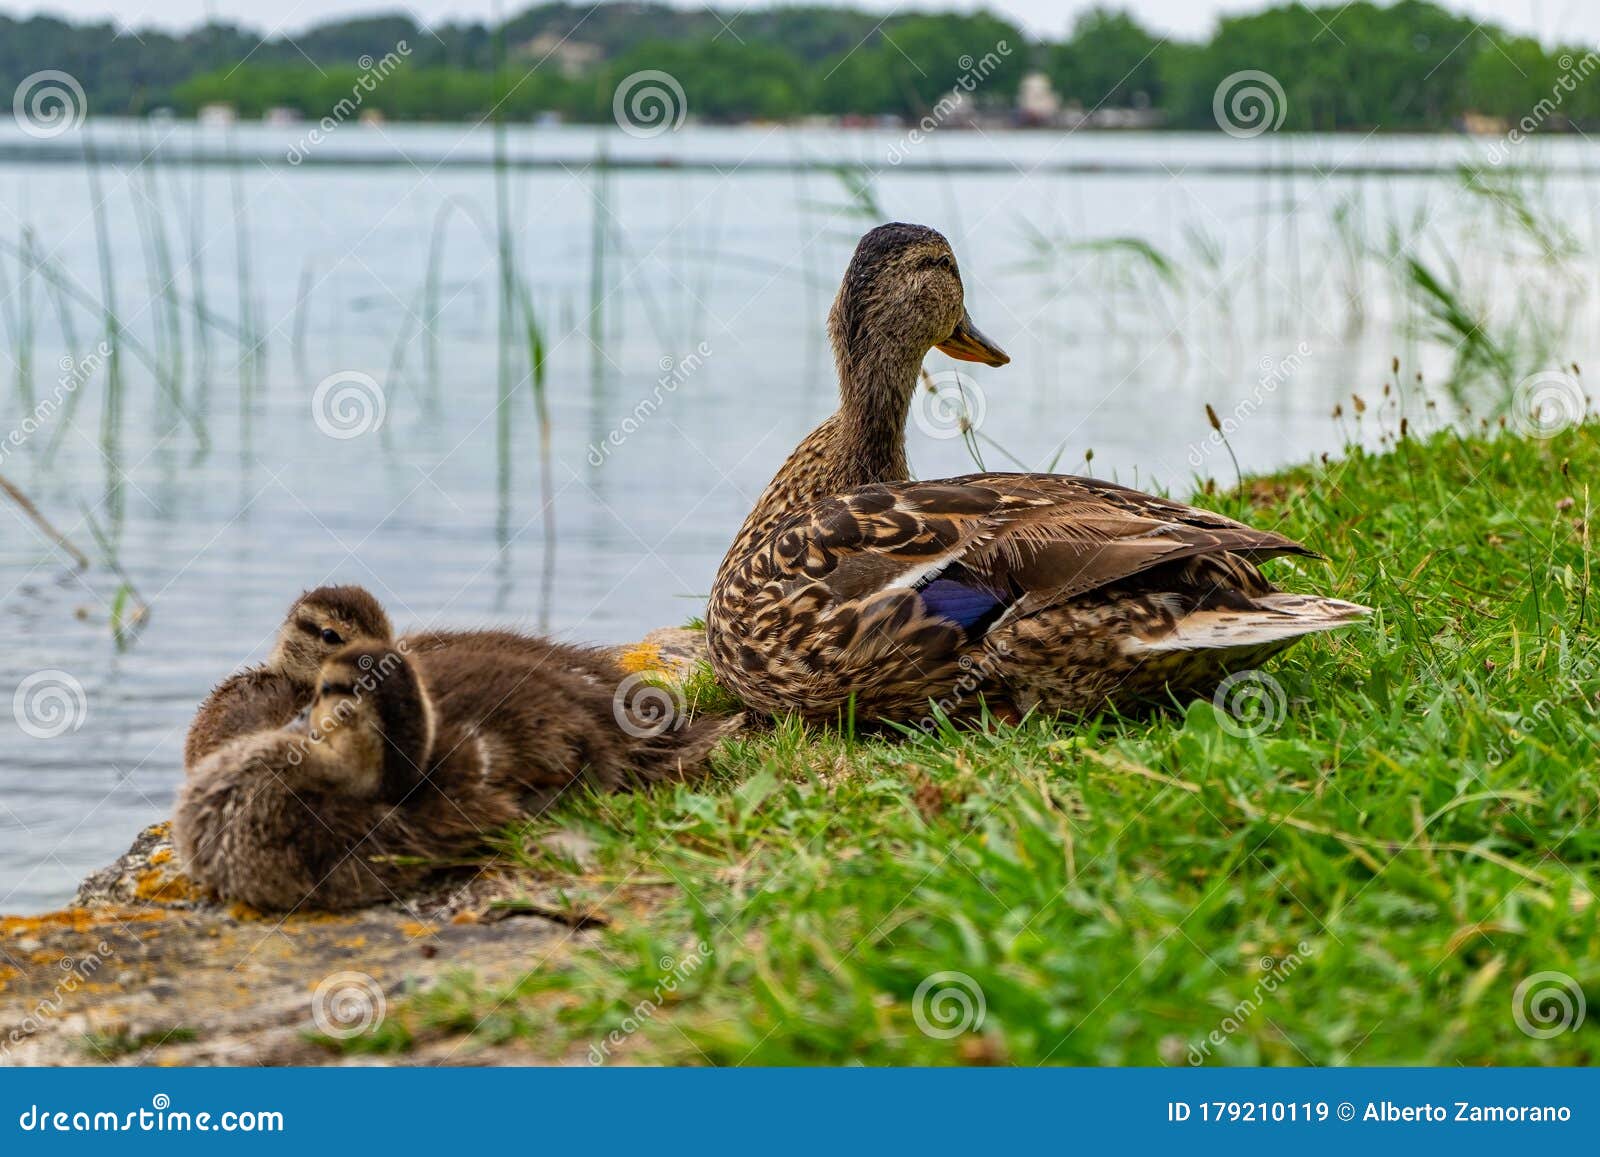 ducks in lake of banyoles in catalonia, spain.